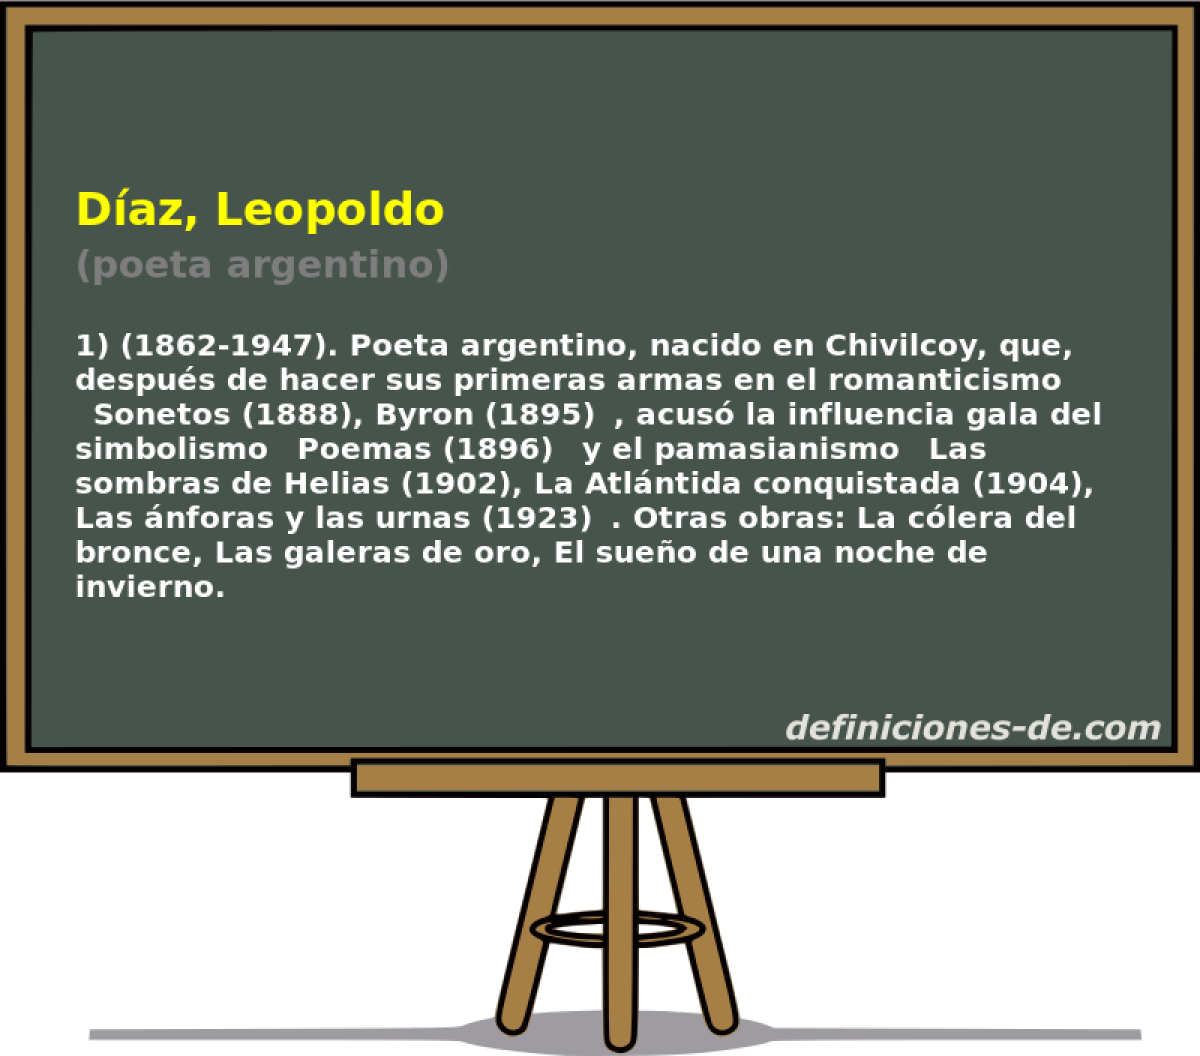 Daz, Leopoldo (poeta argentino)